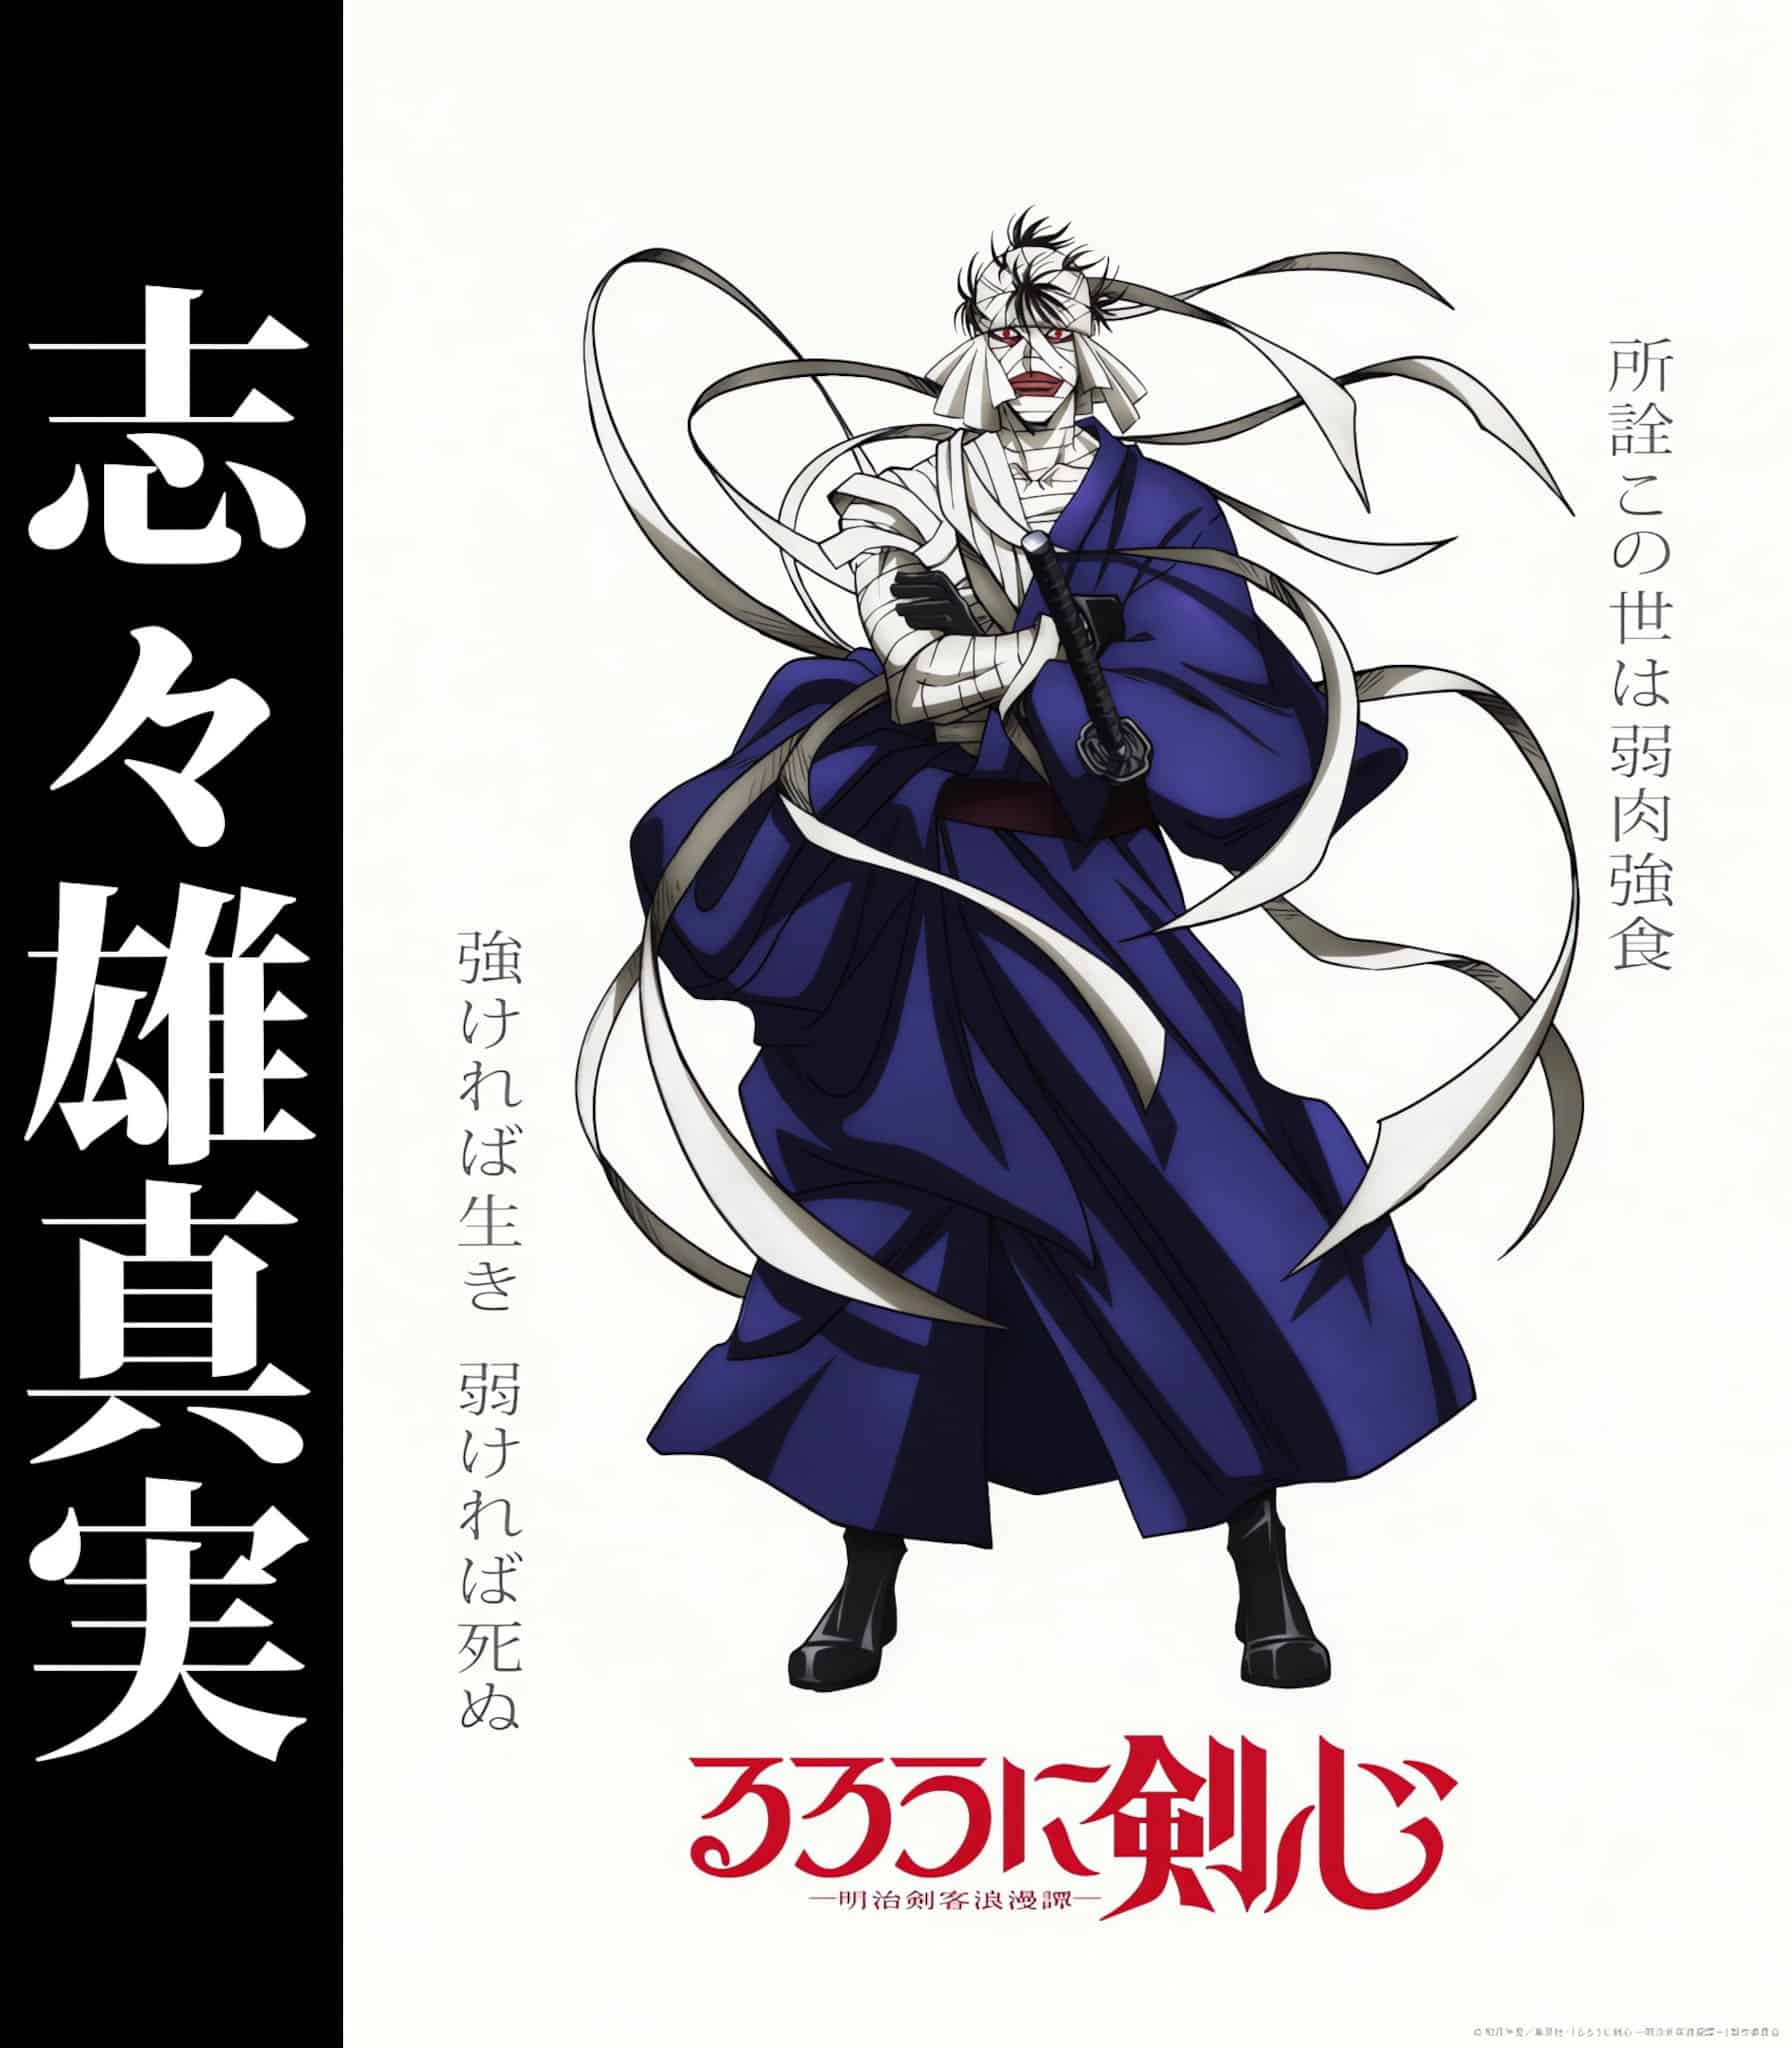 Character visuel de Makoto Shishio pour la saison 2 de l'anime Rurouni Kenshin